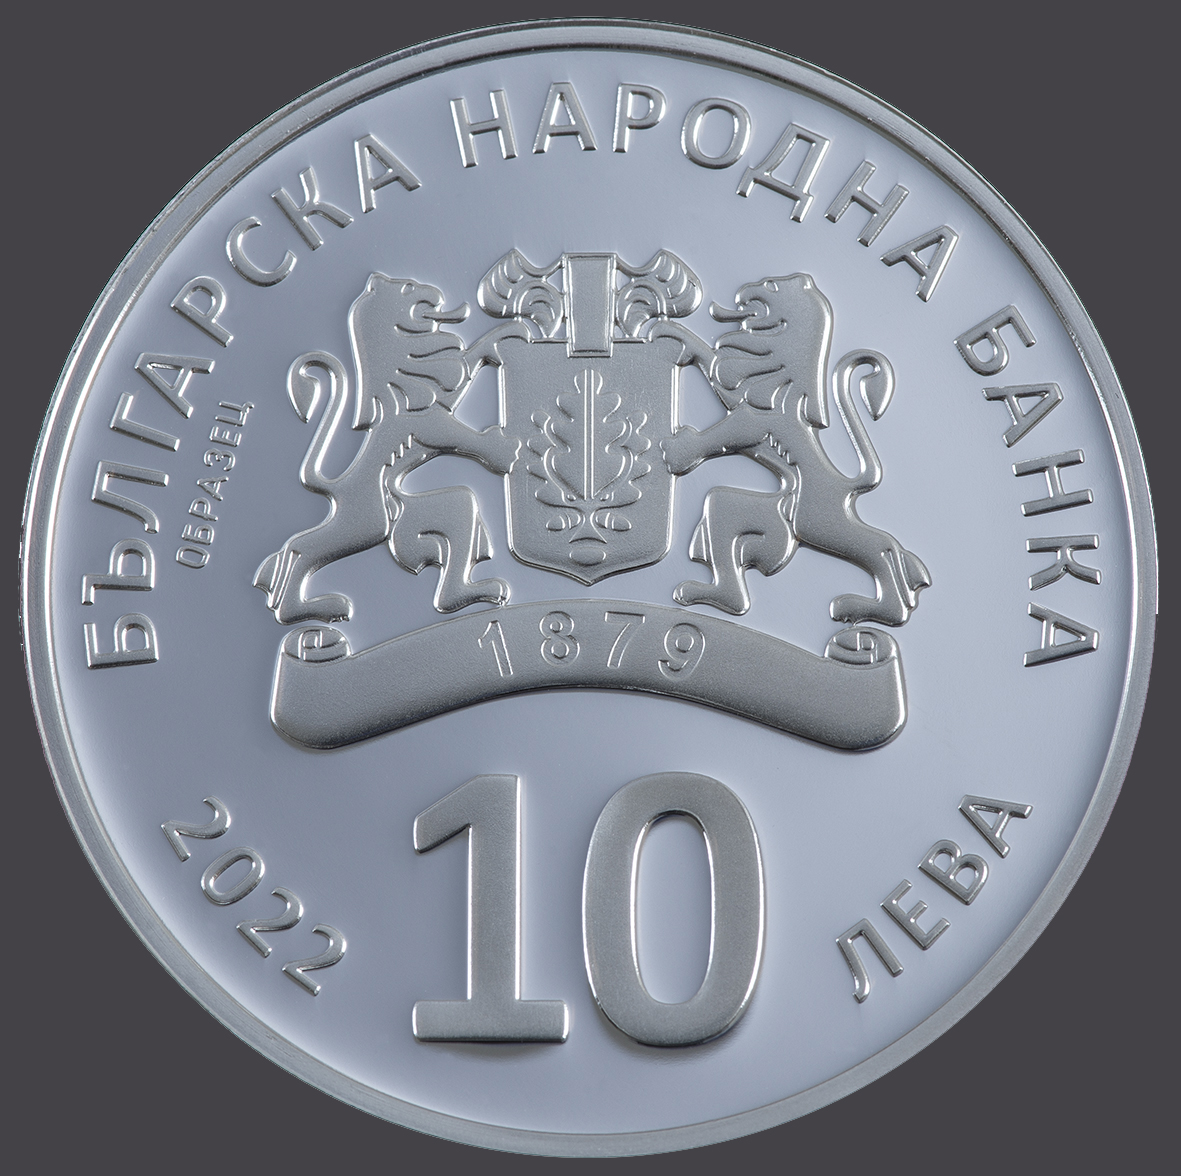  Българска народна банка 